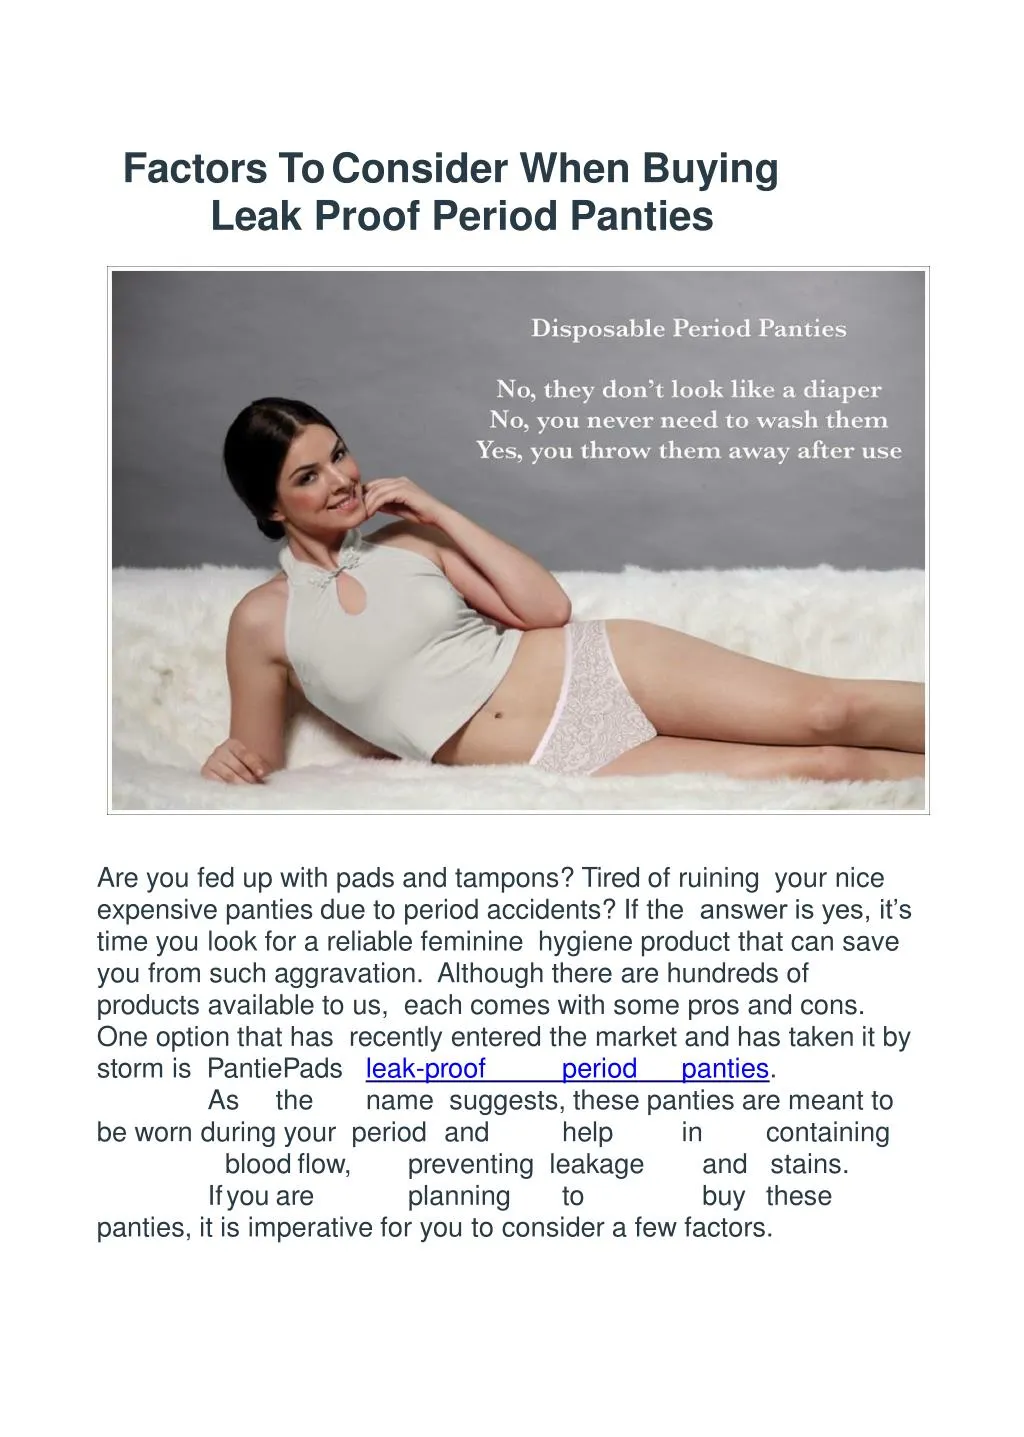 factors to consider when buying leak proof period panties